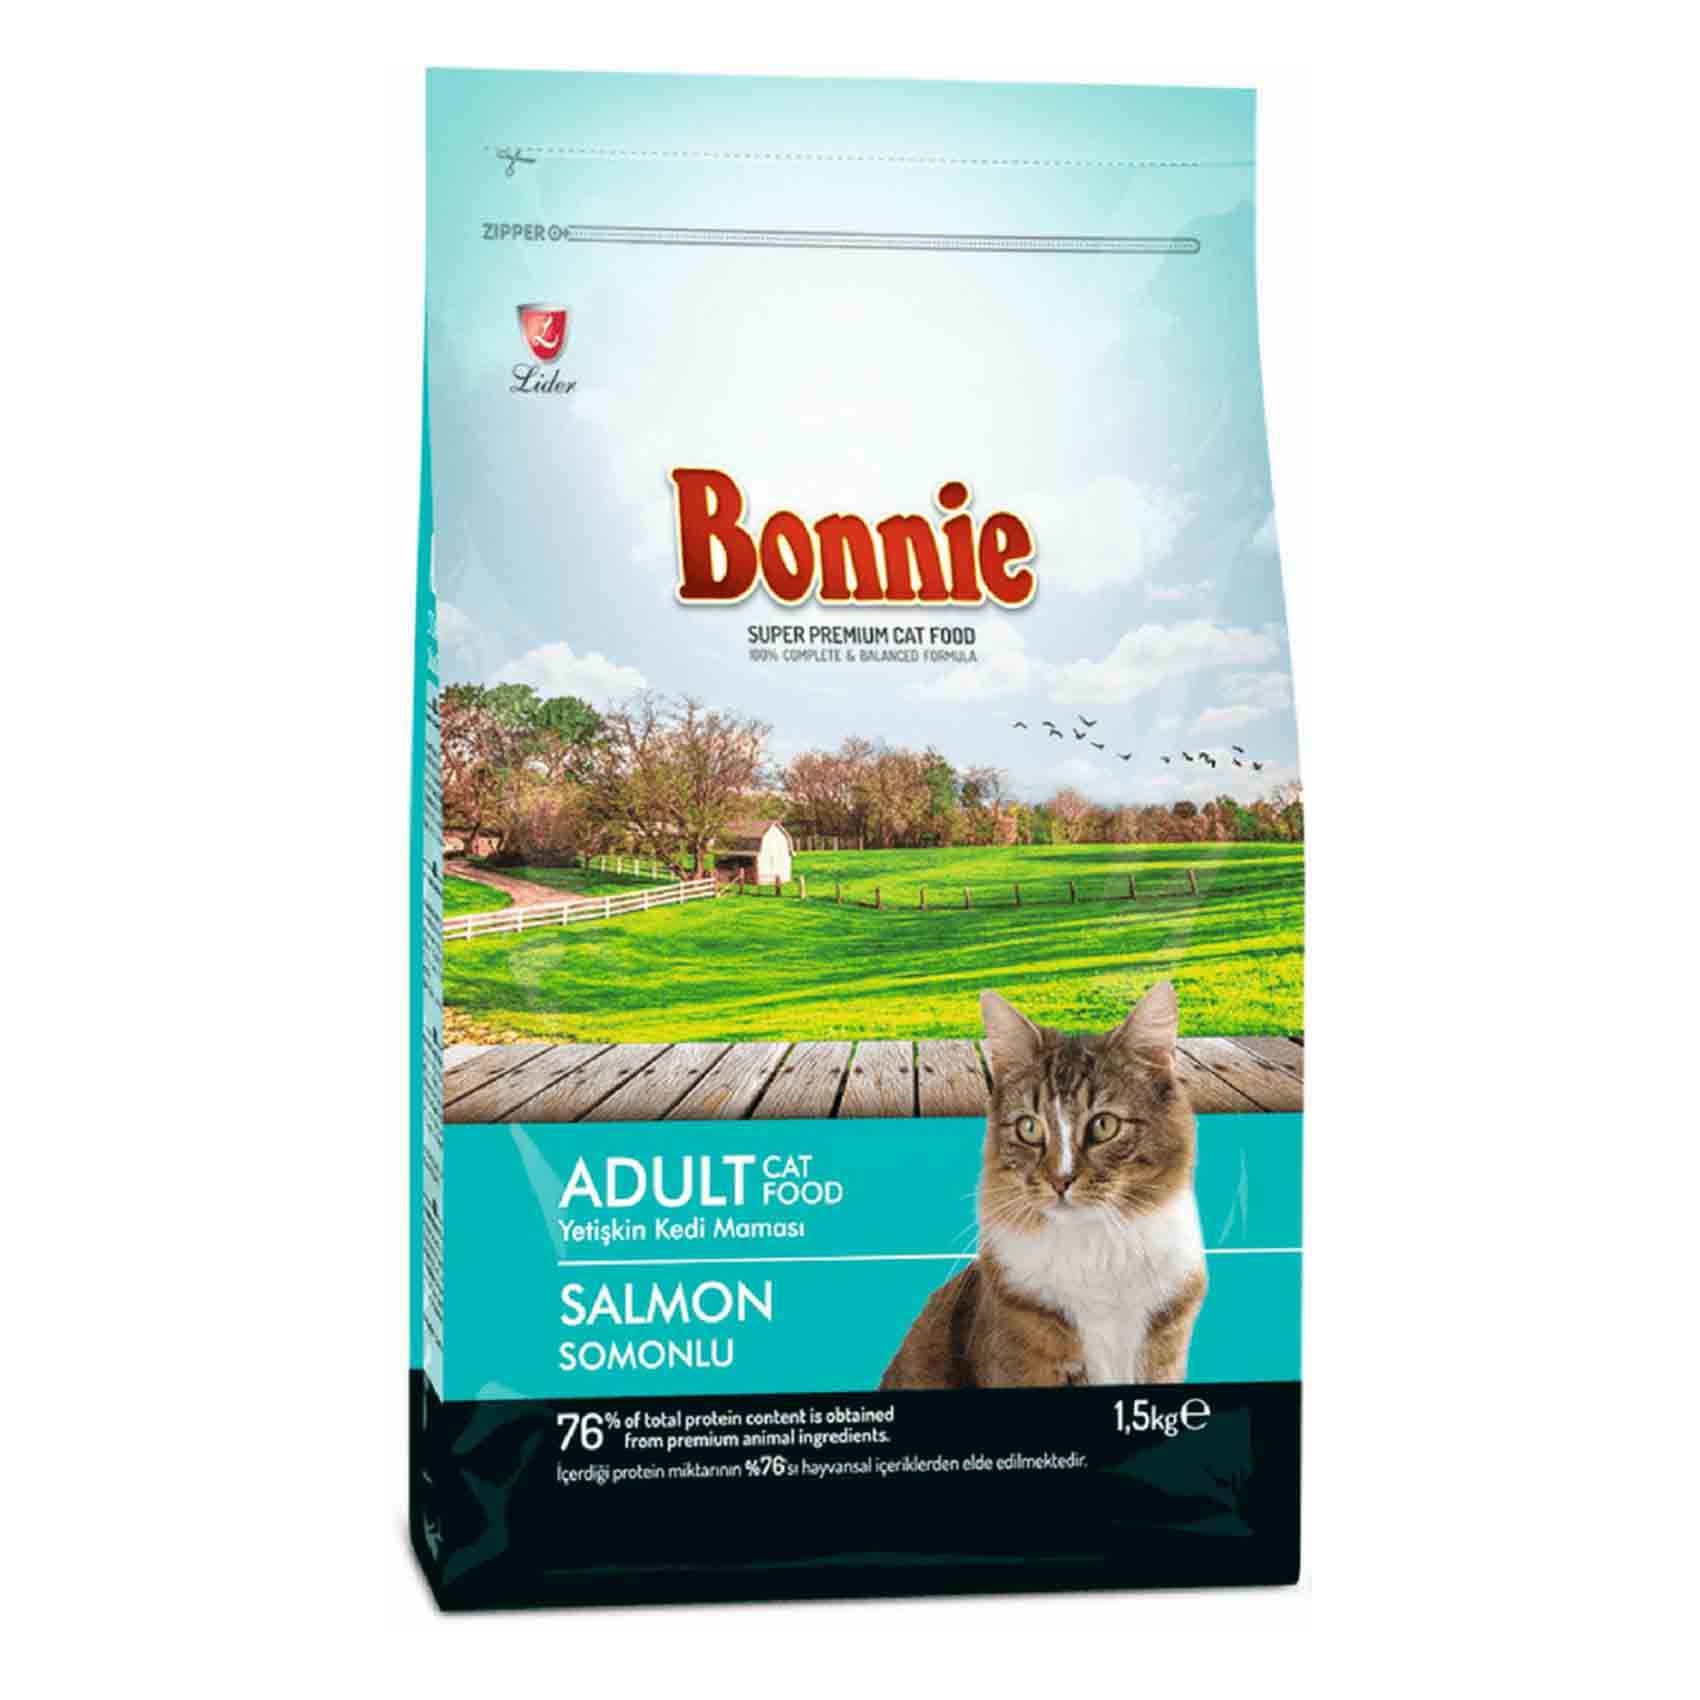 Bonnie Salmon Adult Cat Food 1.5Kg